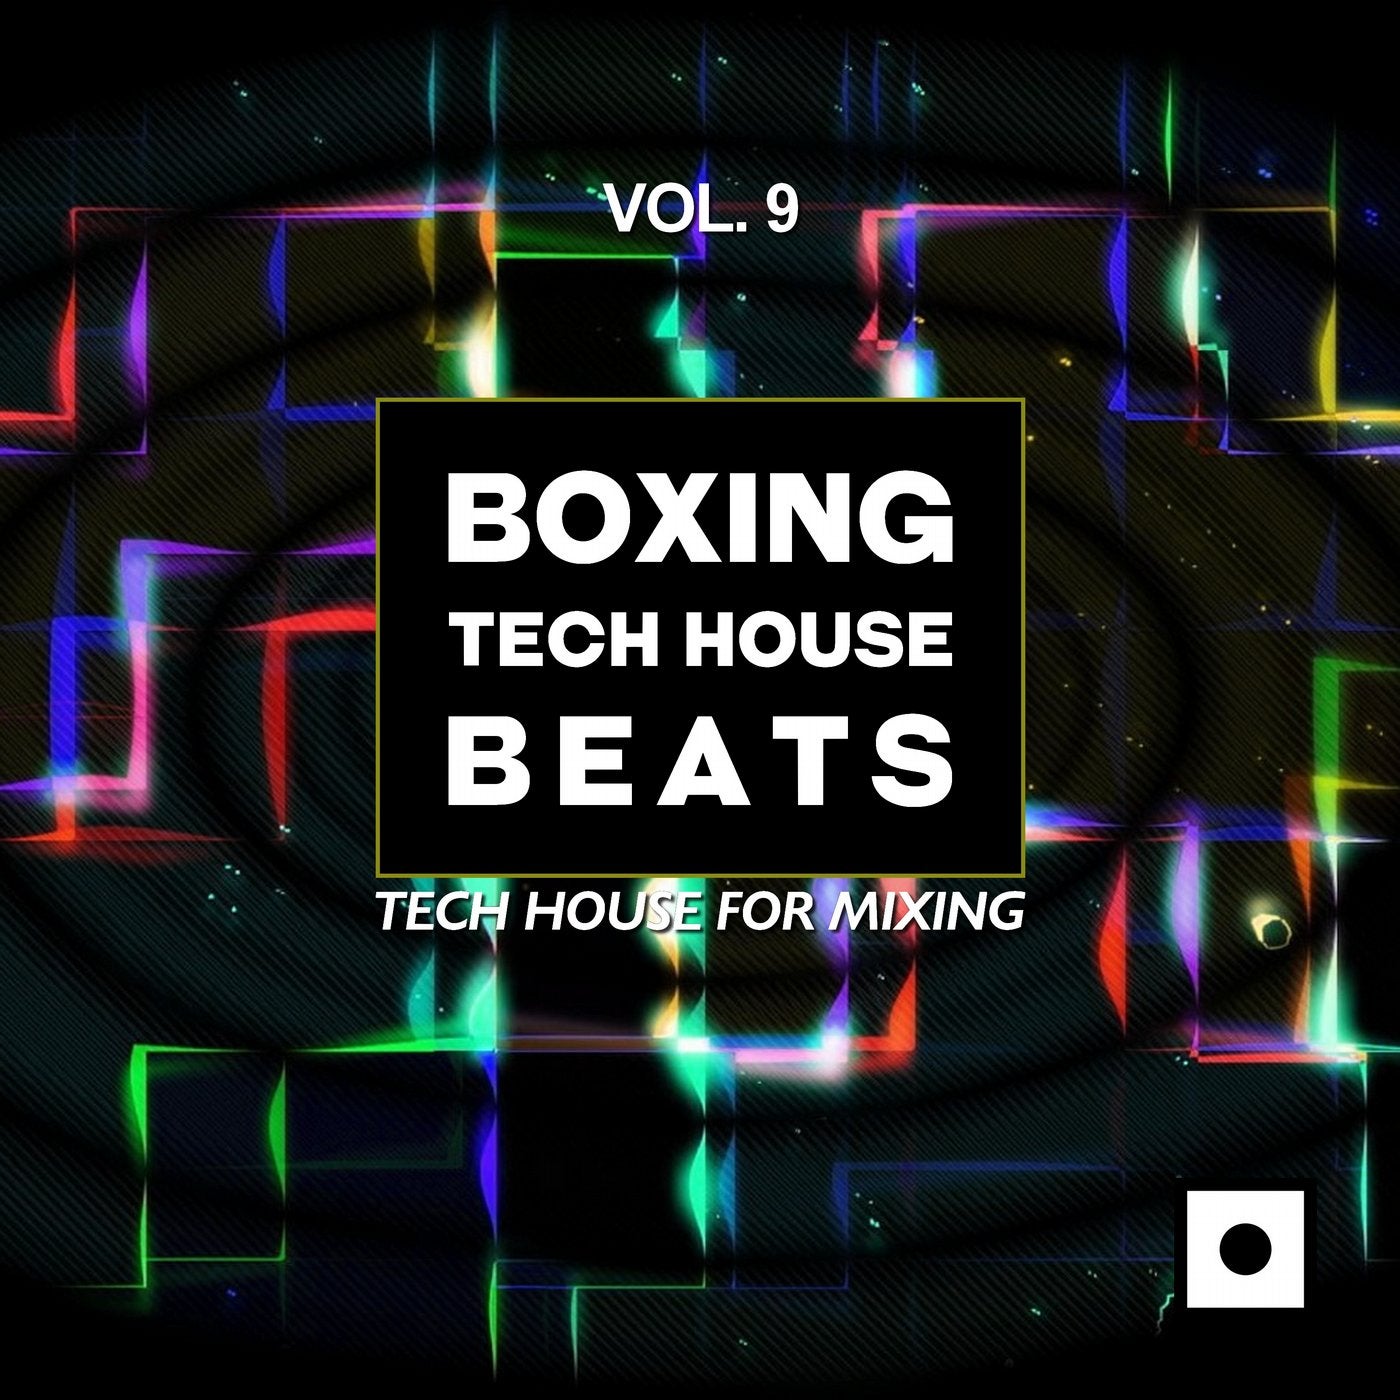 Boxing Tech House Beats, Vol. 9 (Tech House For Mixing)